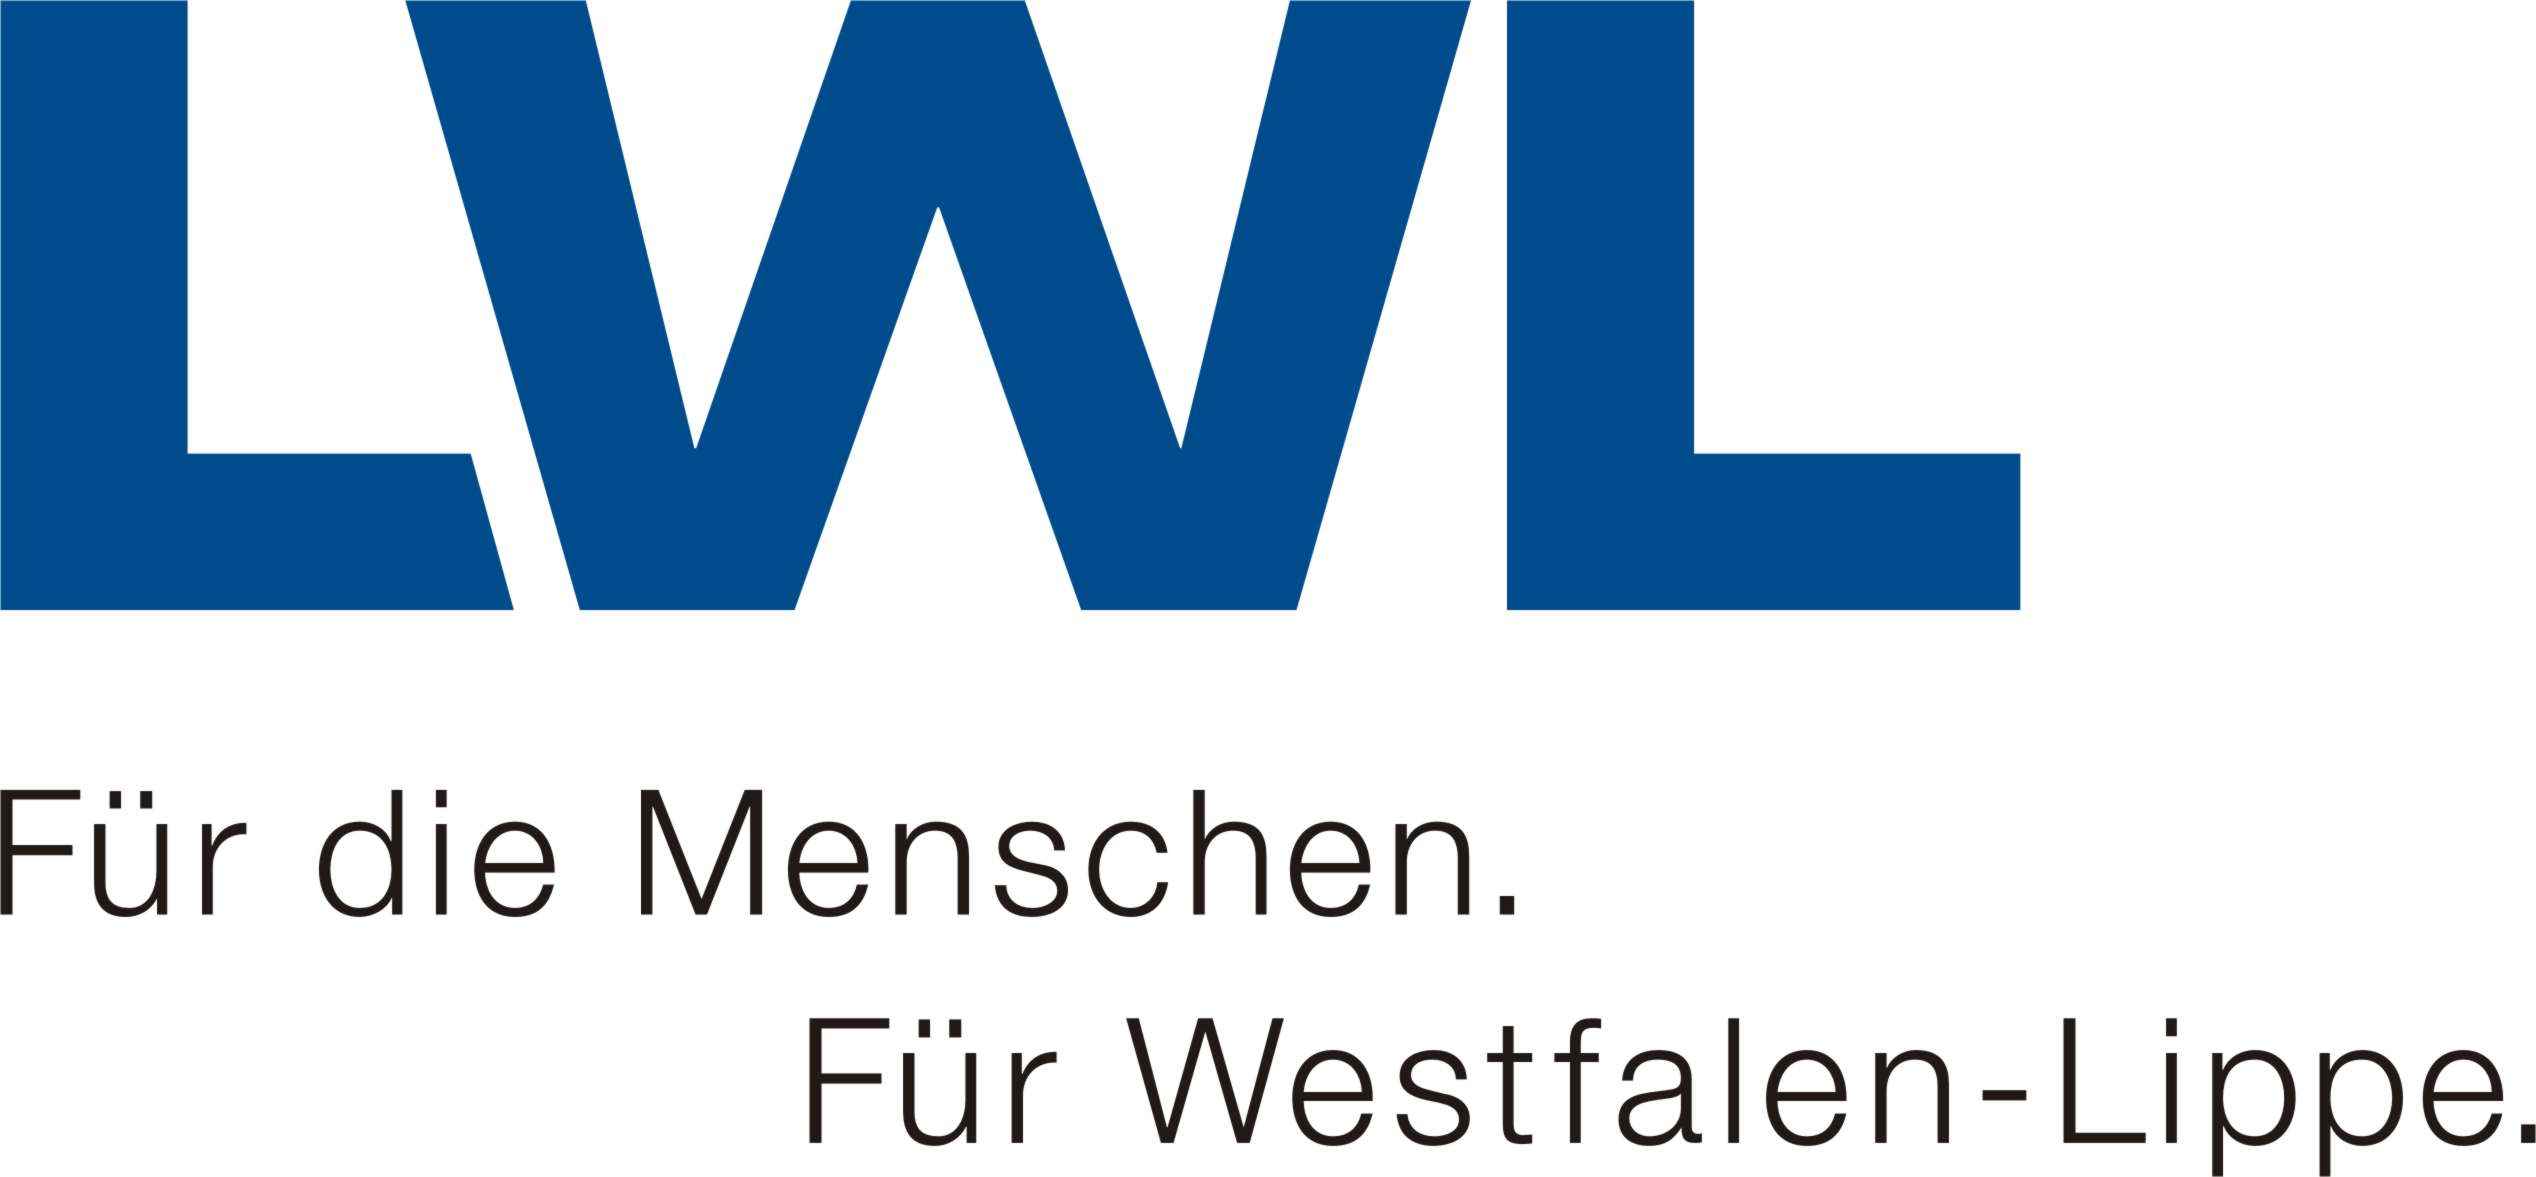 Landschaftsverband Westfalen-Lippe
